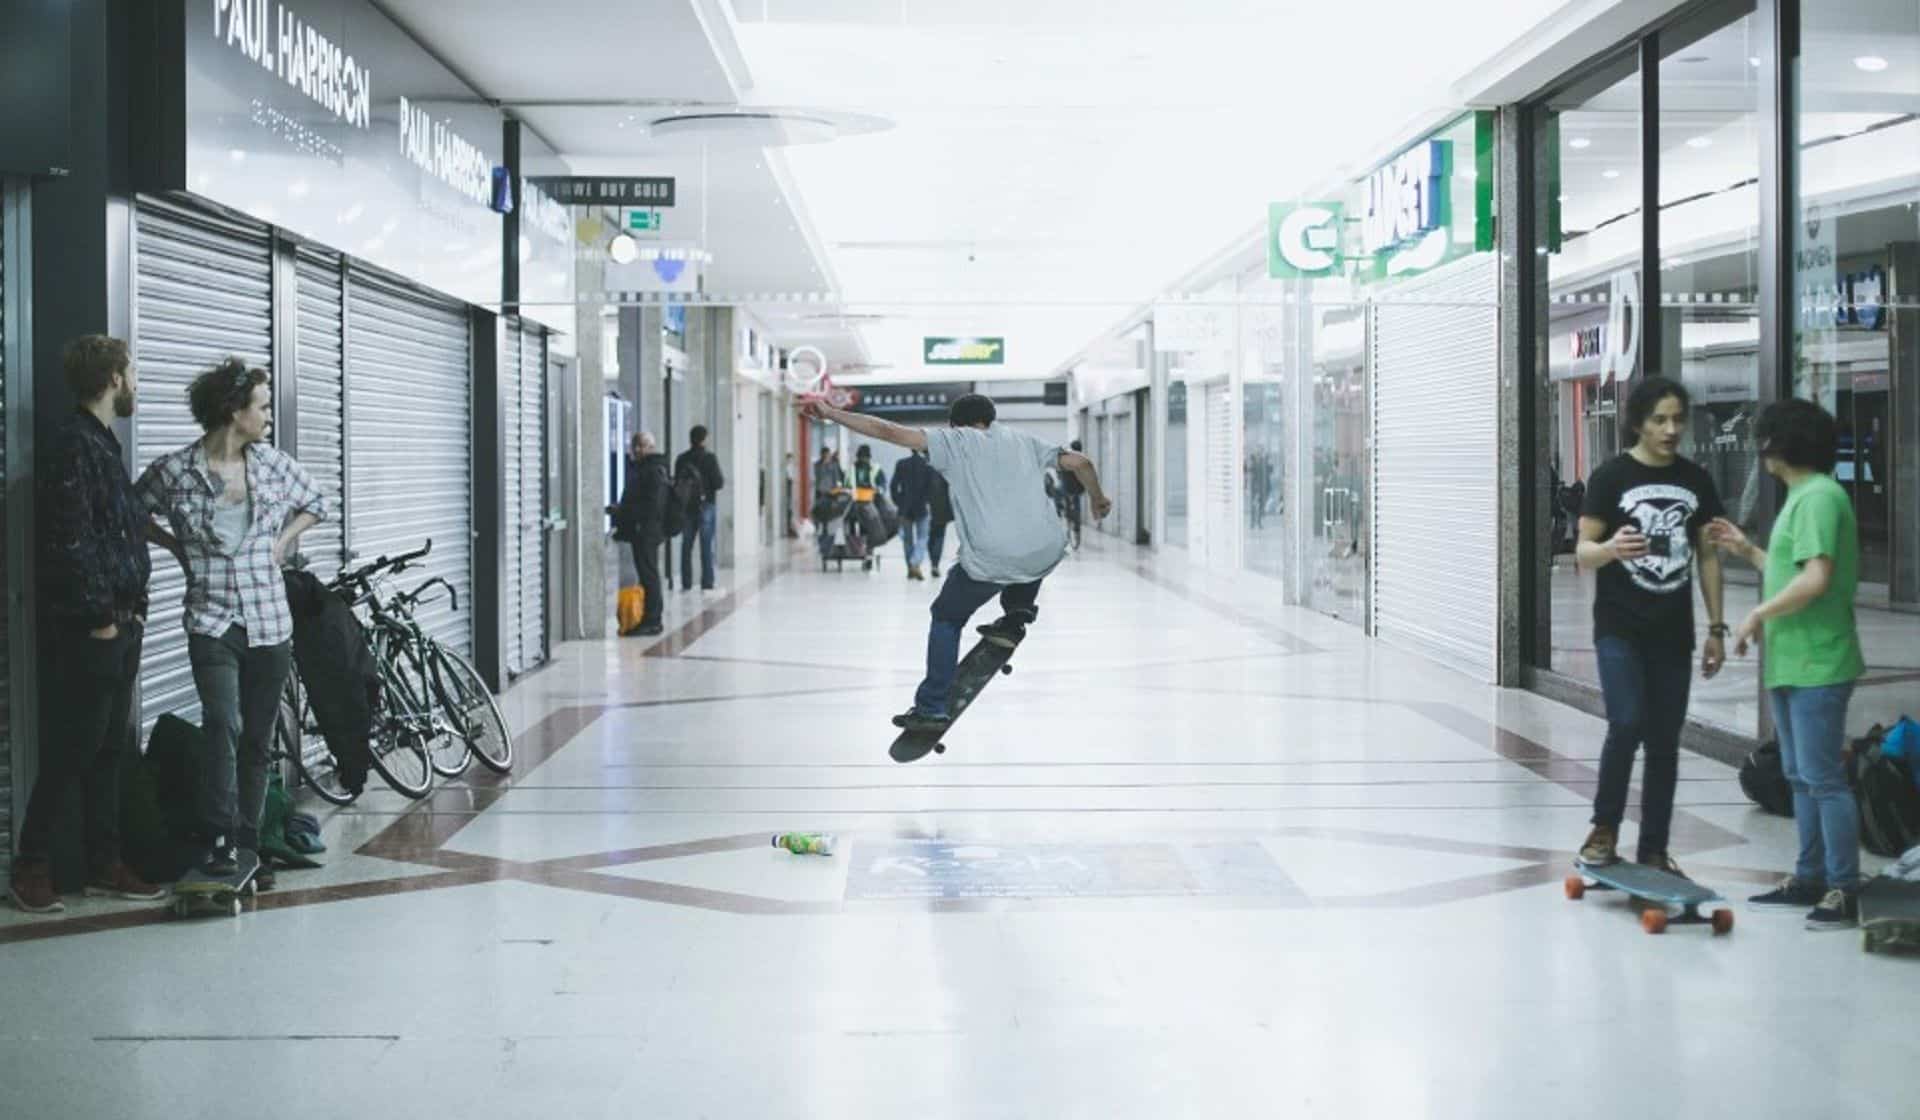 Skating Haven (Roller Skating London) in UK